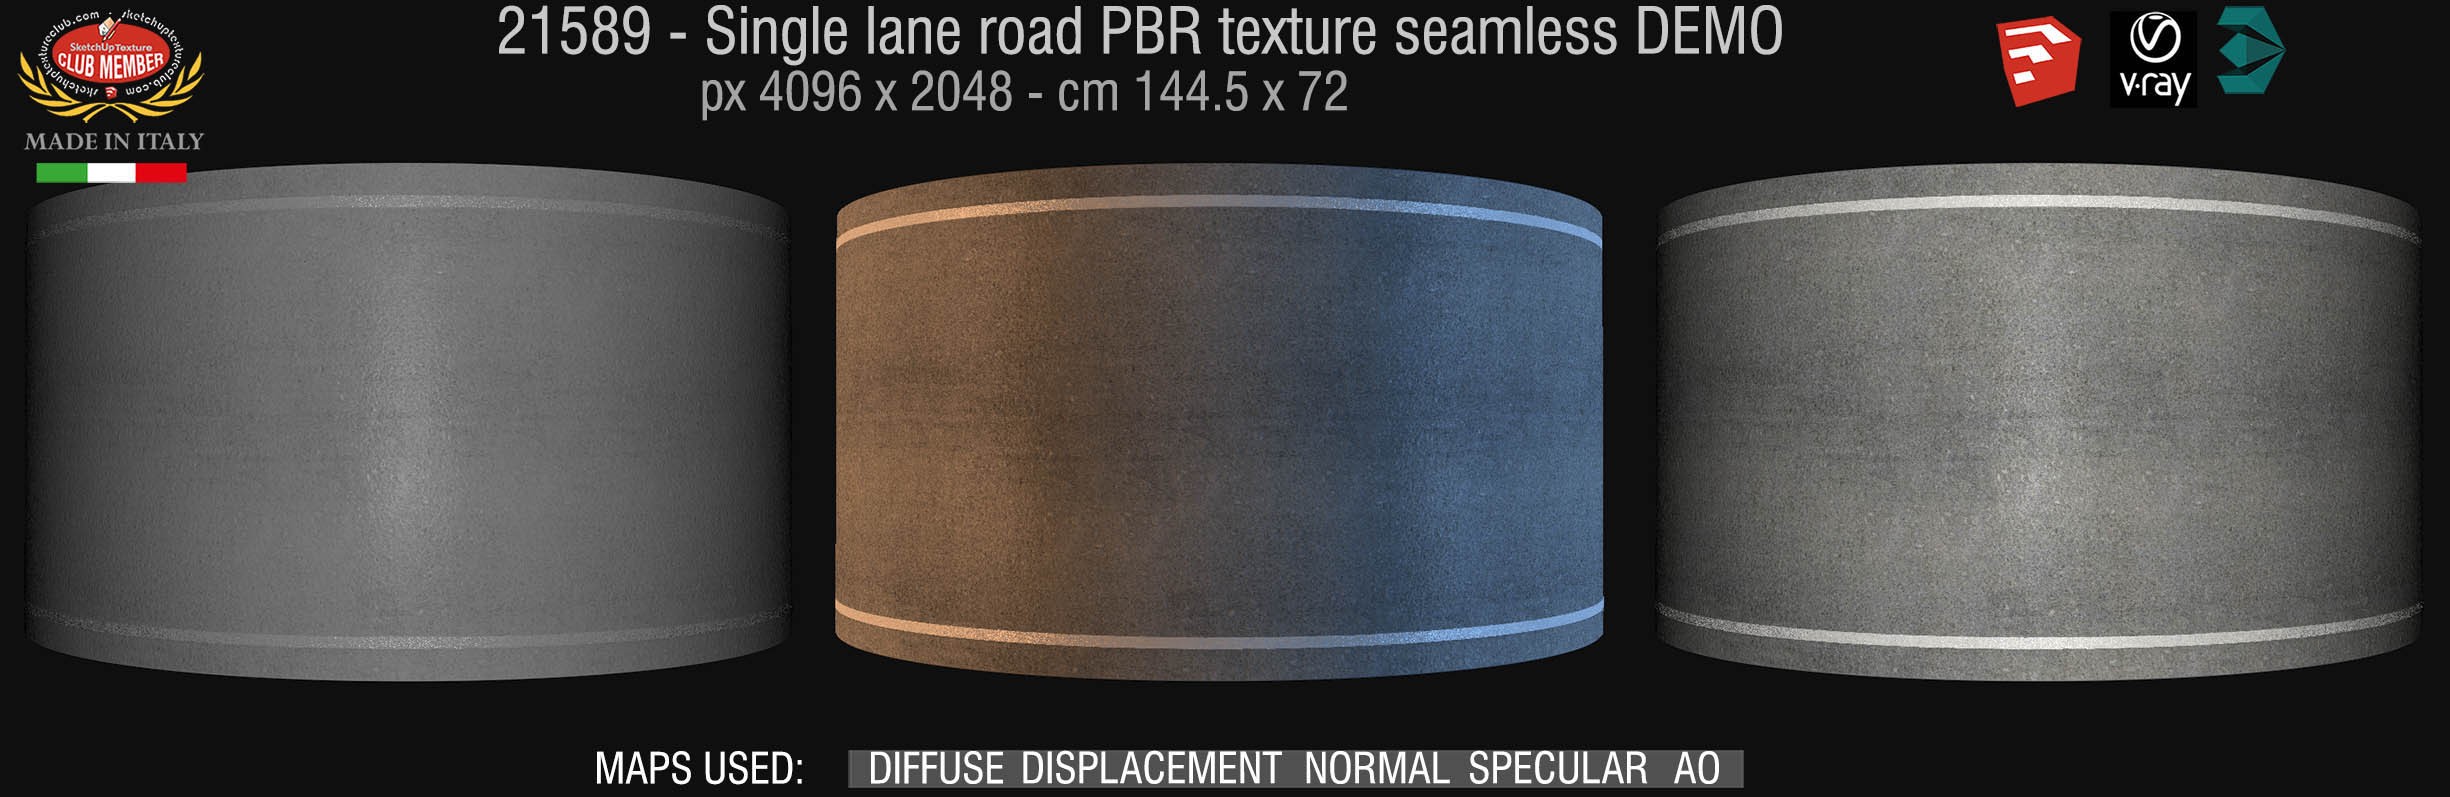 21589 Single lane road clean PBR texture seamless DEMO